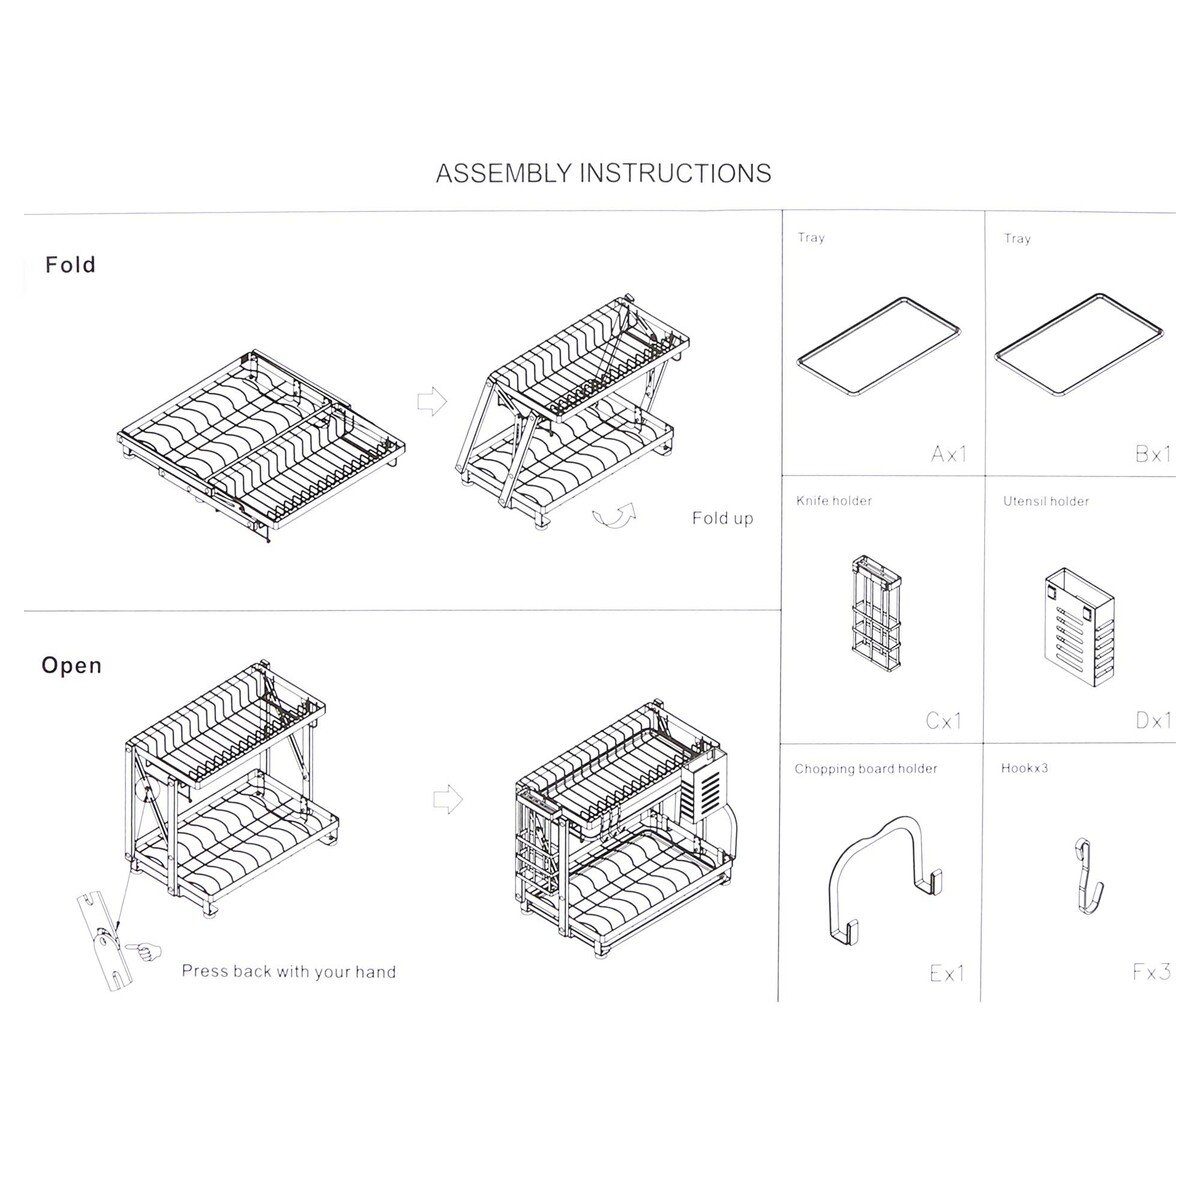 Home Foldable Dish Rack WK810400